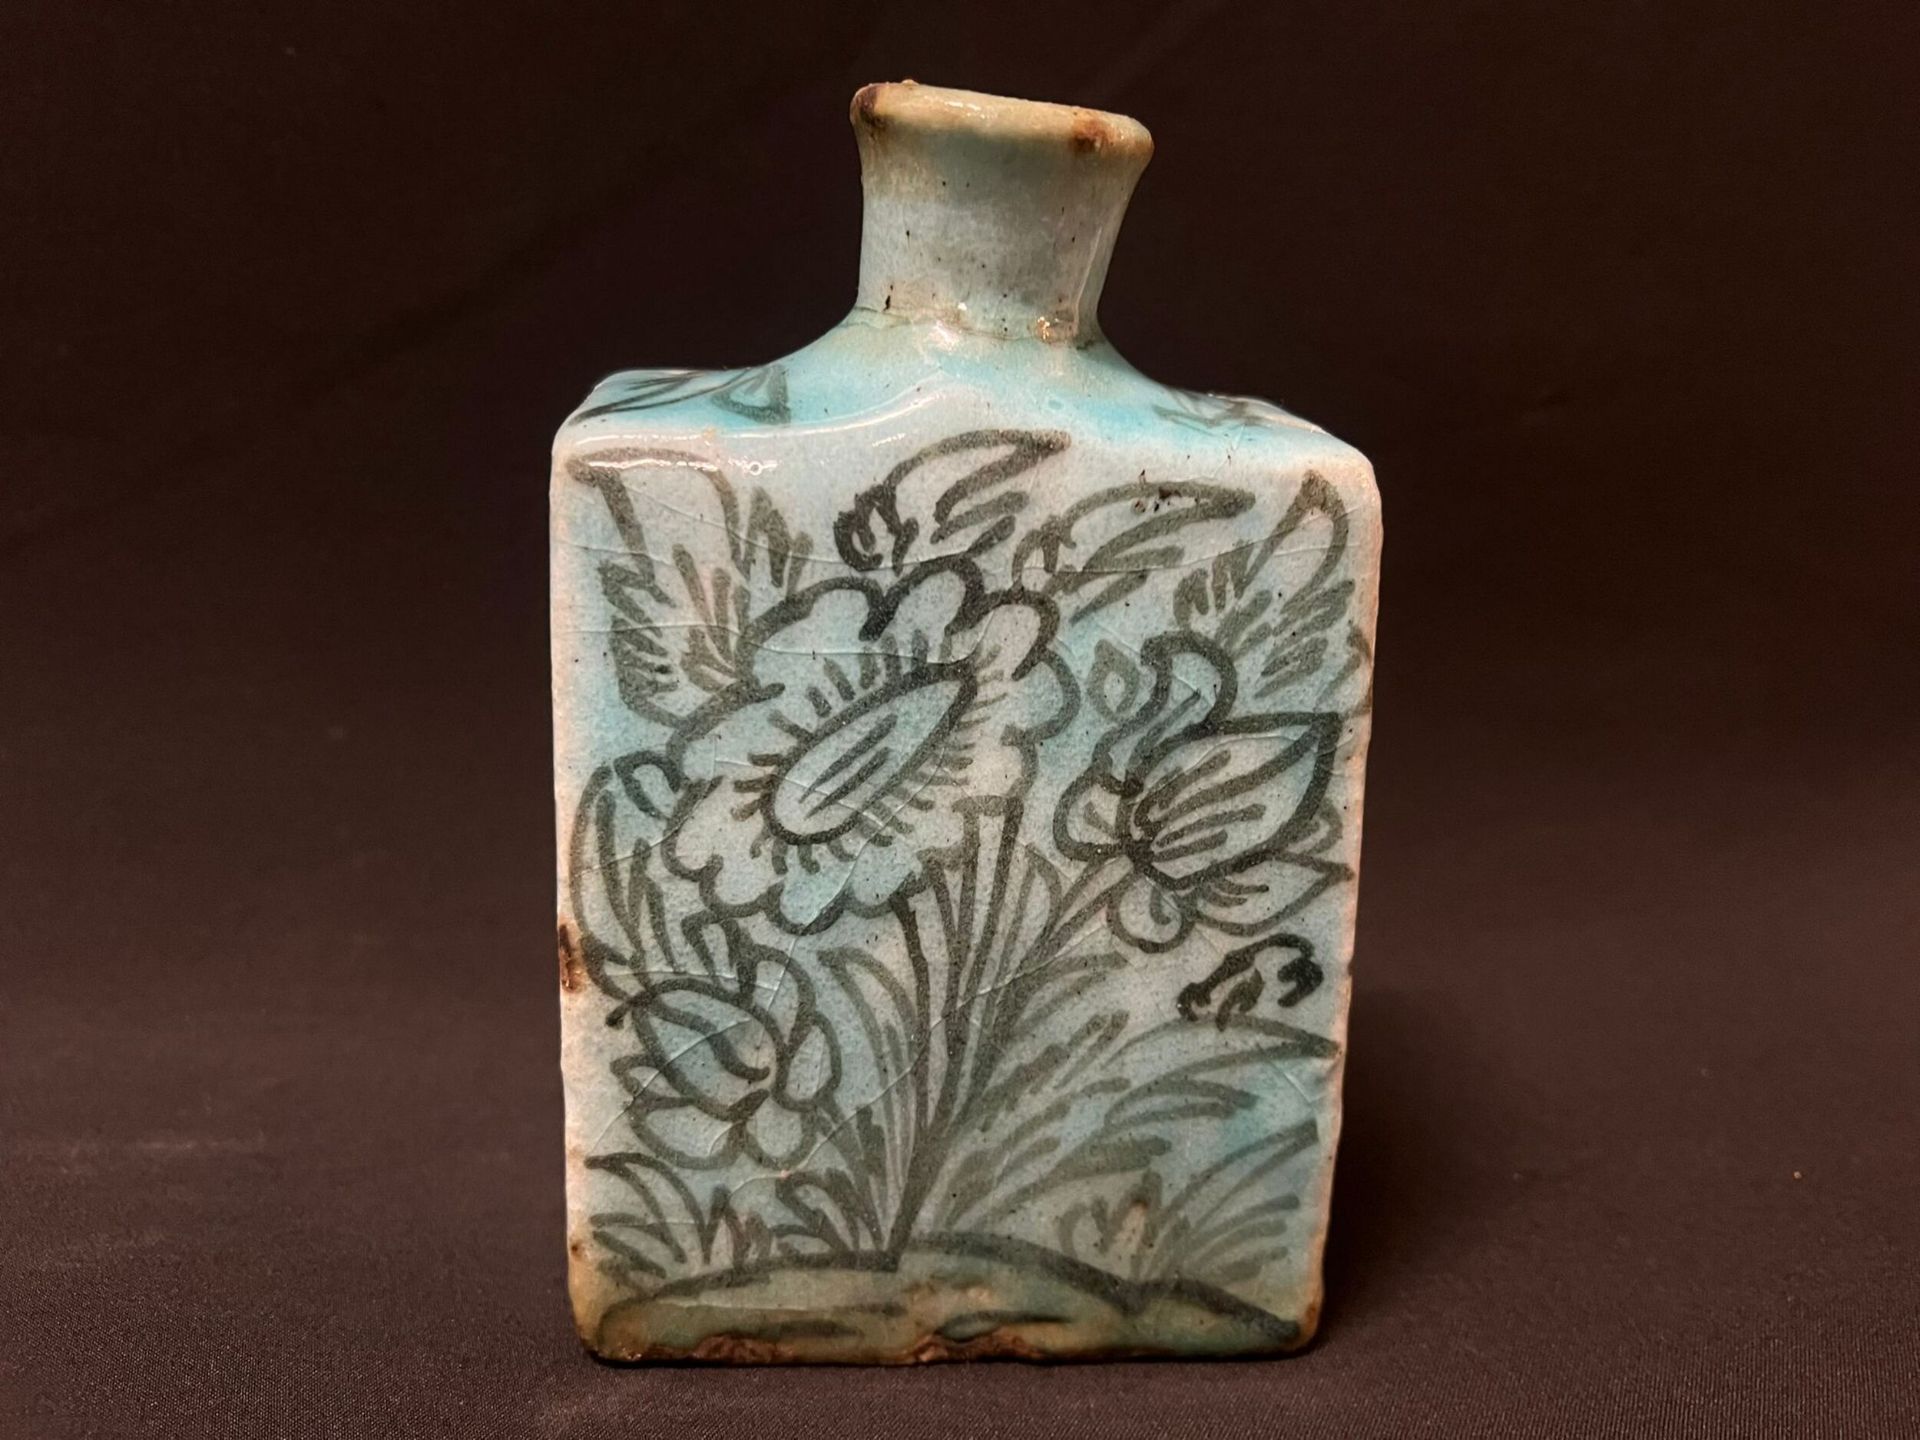 Persian Khanjar or Raqqa glazed ceramic bottle, 18th century Islamic work